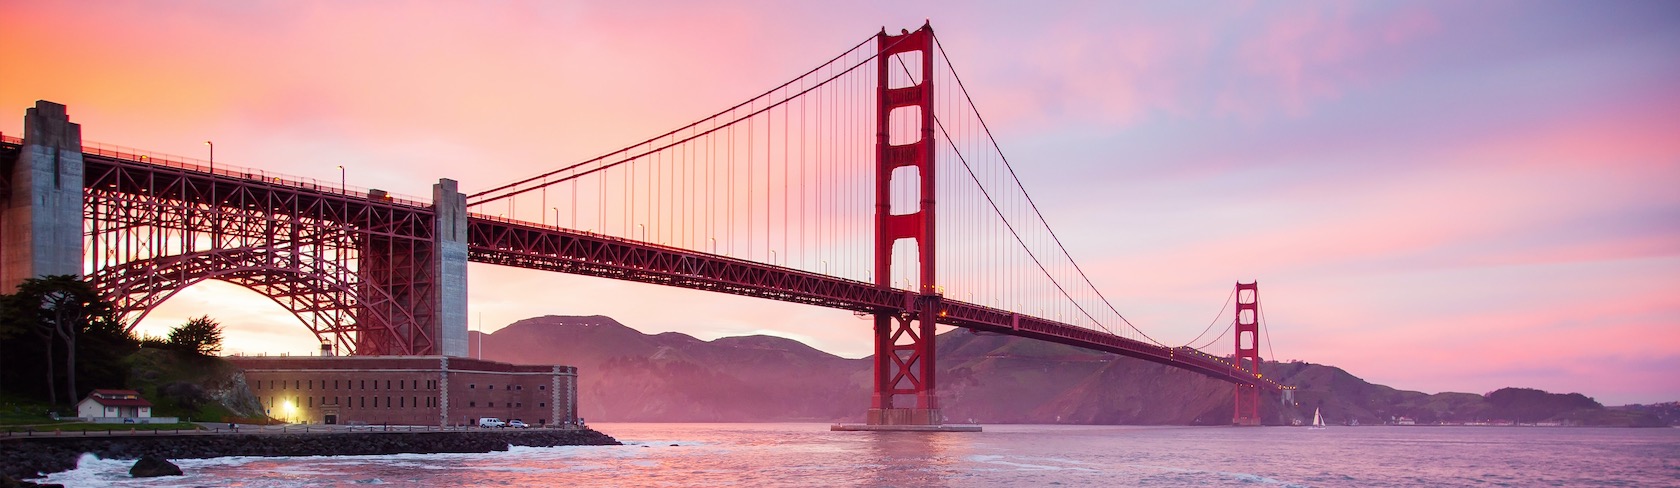 San Francisco Golden Gate Bridge bei Sonnenuntergang